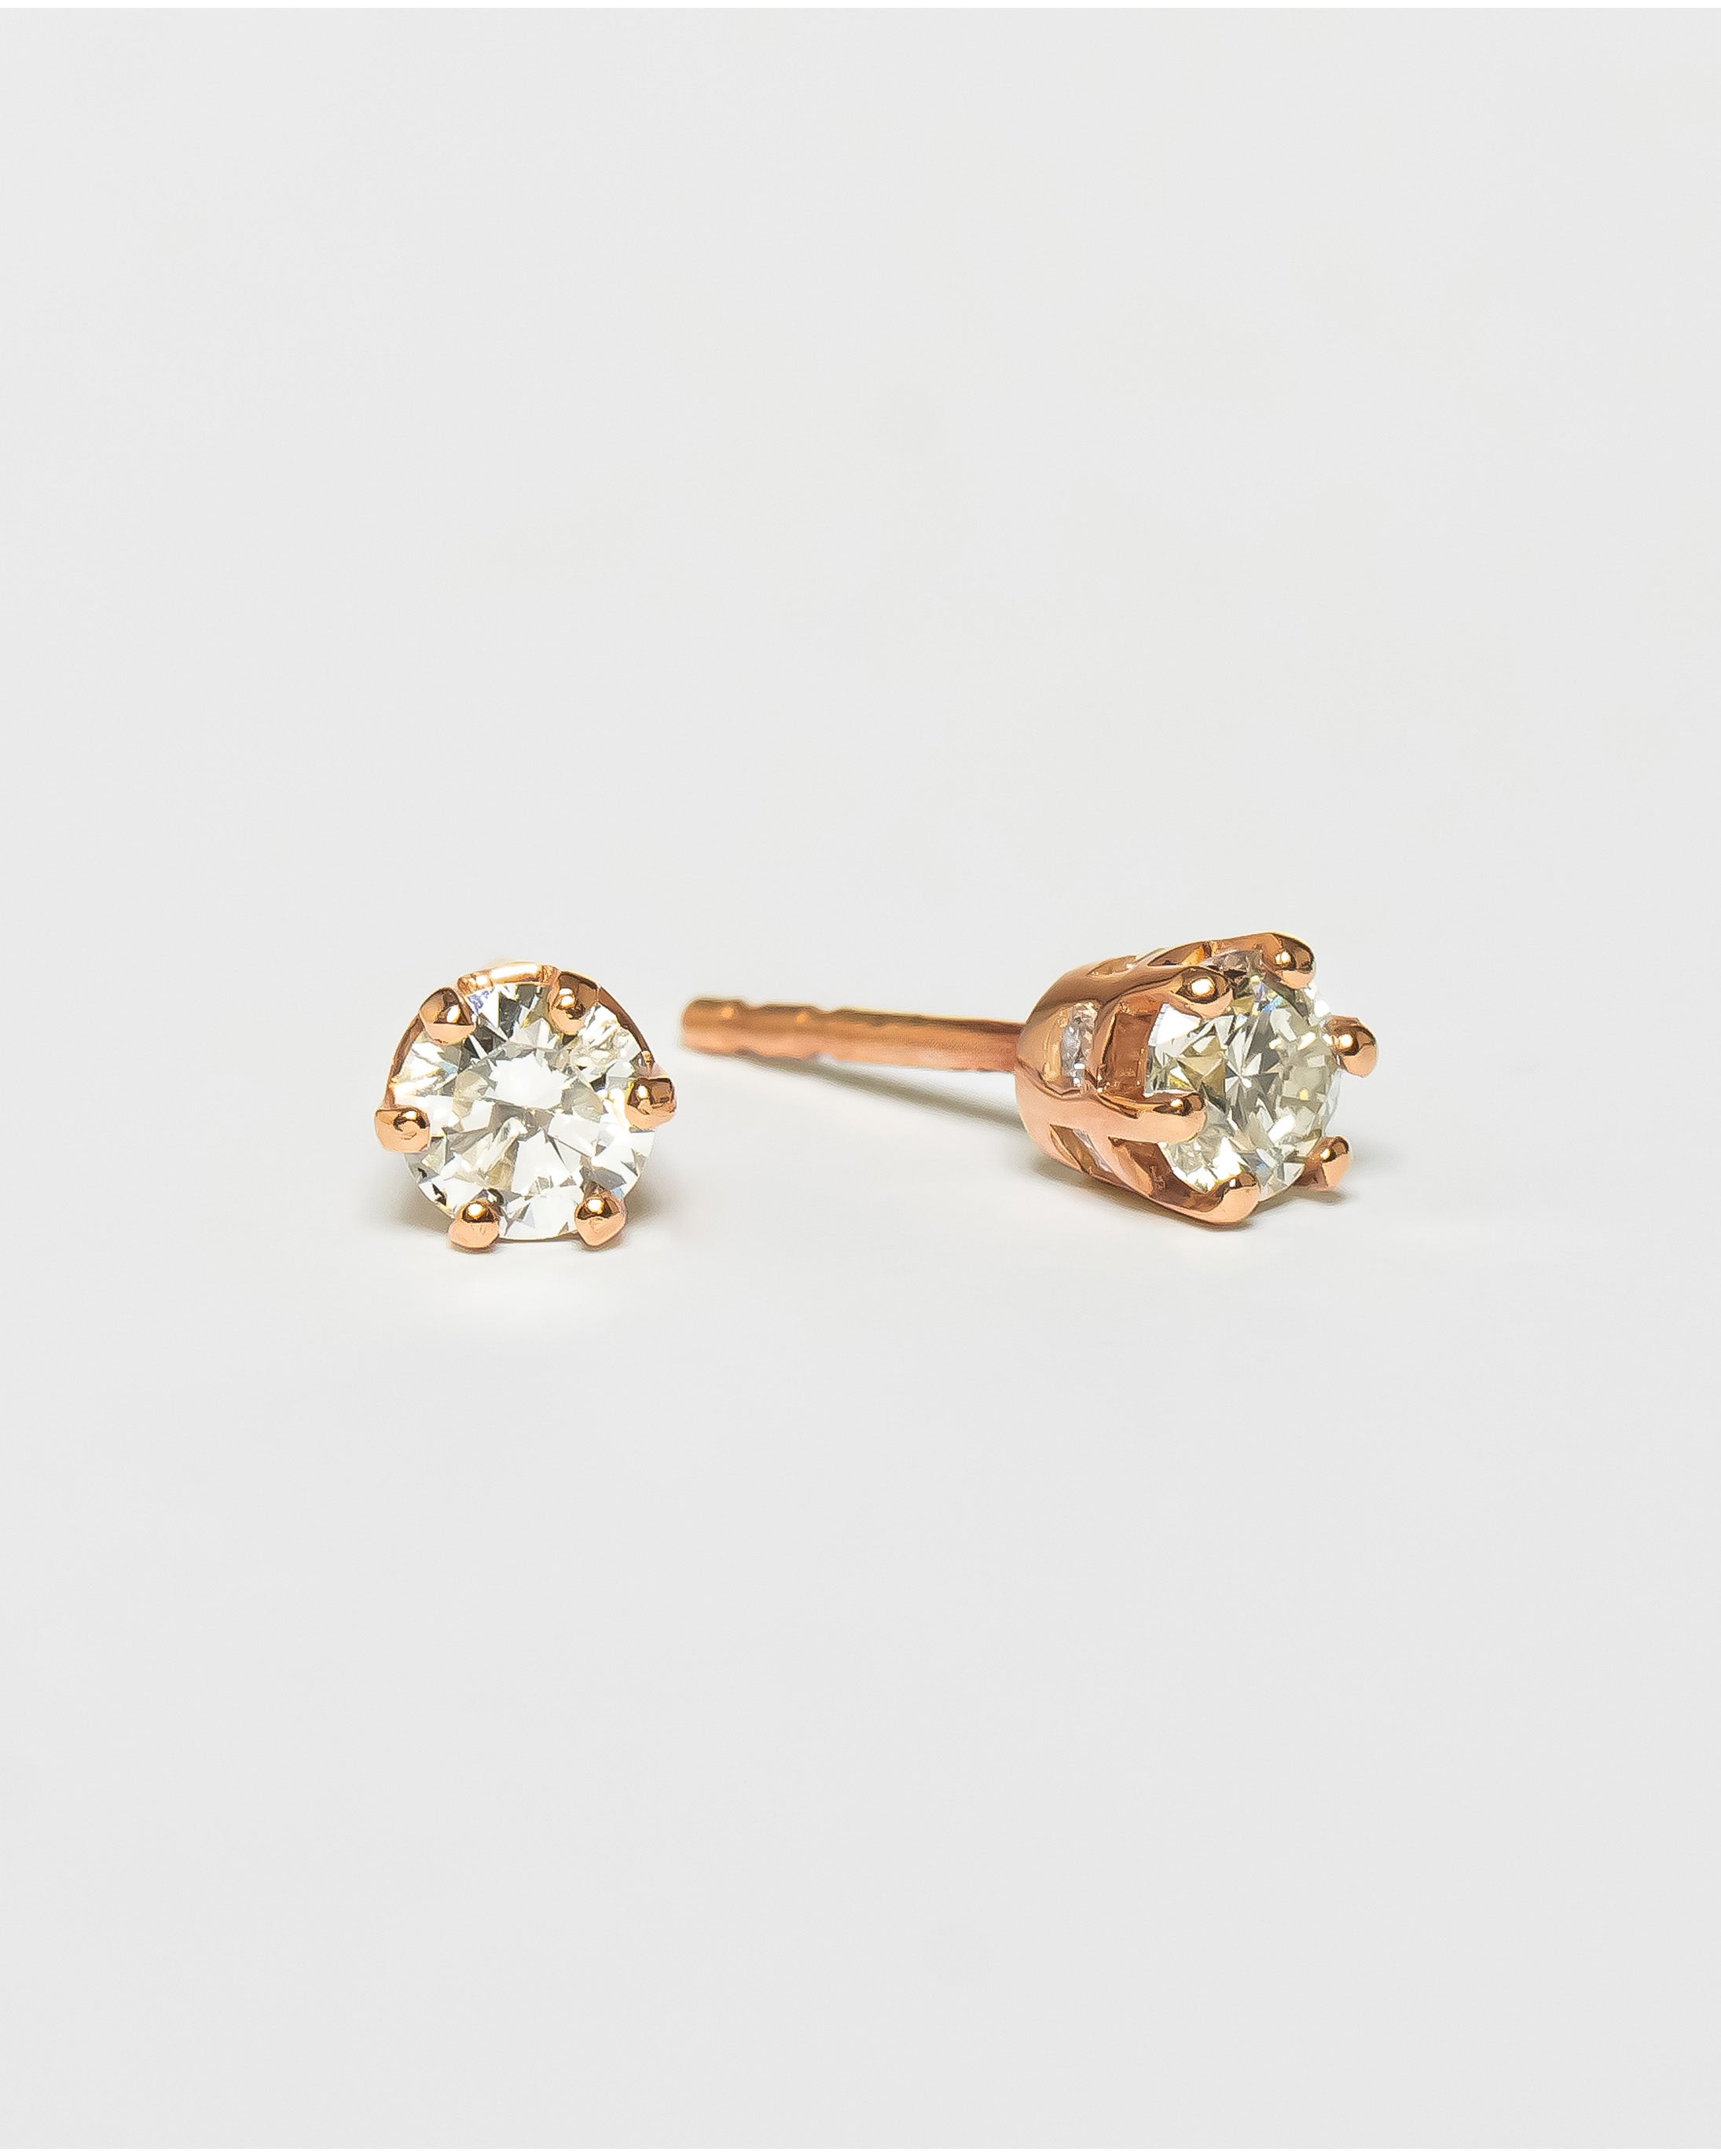 JR Solitaire Collection - Earrings Diamonds x Roségold